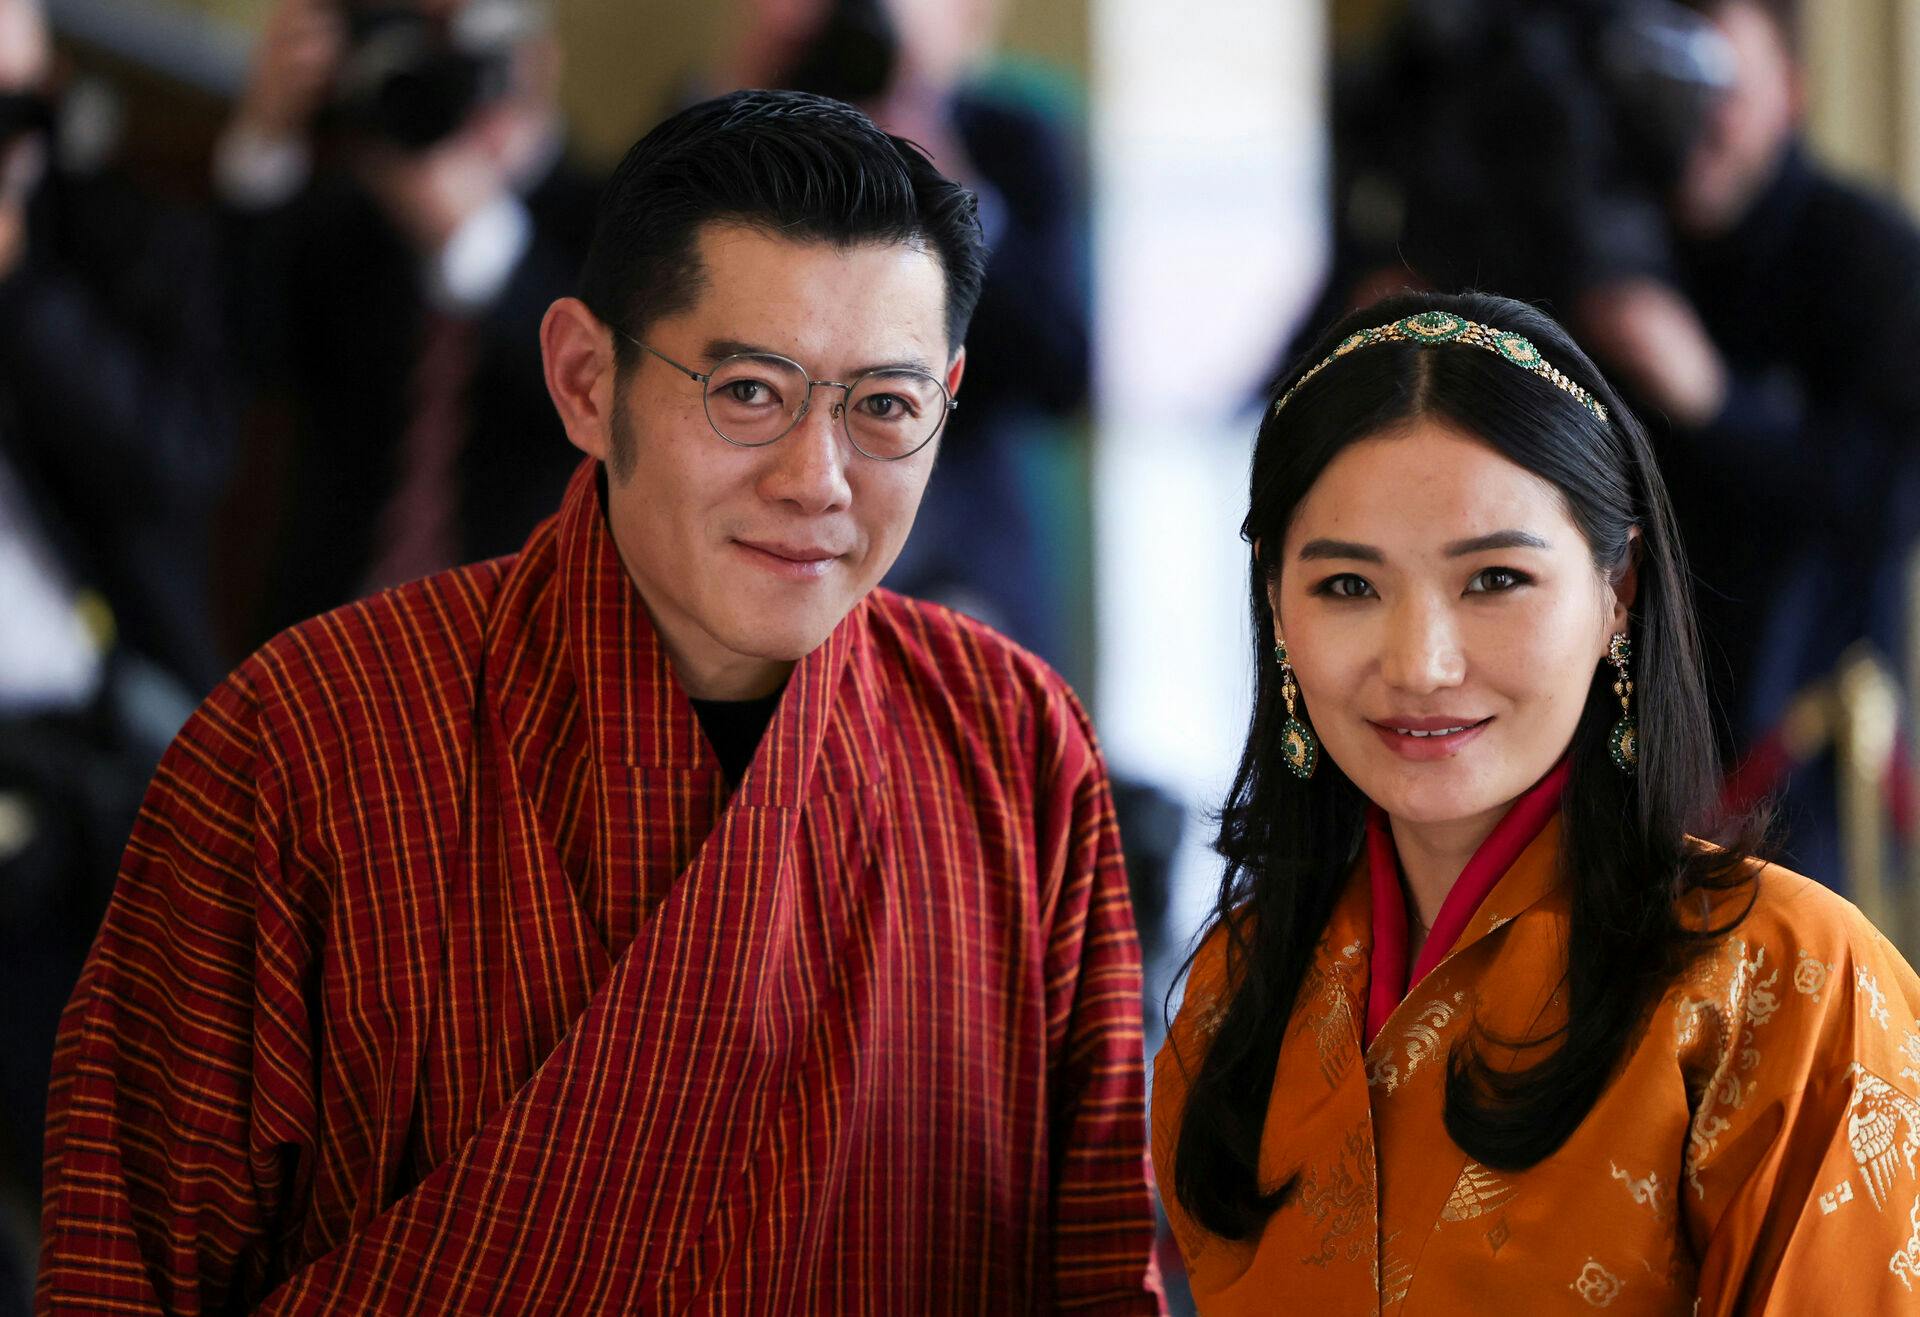 Bhutan's King Jigme Khesar Namgyel Wangchuck and Queen Jetsun Pema arrive to Britain's King Charles' reception at Buckingham Palace in London, Britain May 5, 2023 REUTERS/Henry Nicholls